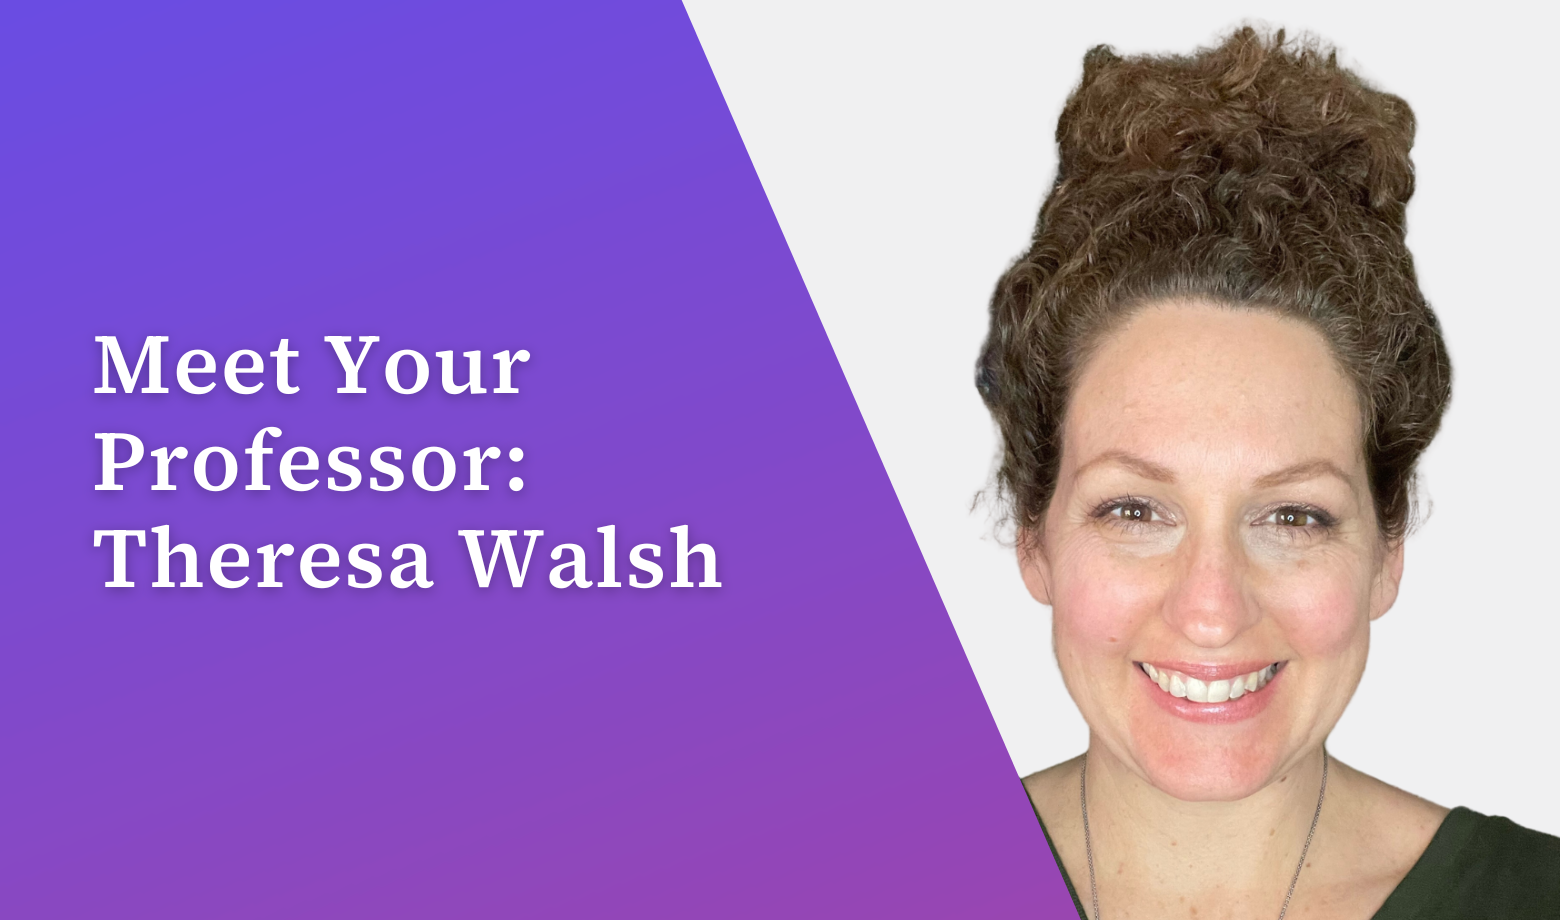 Meet Your Professor: Theresa Walsh